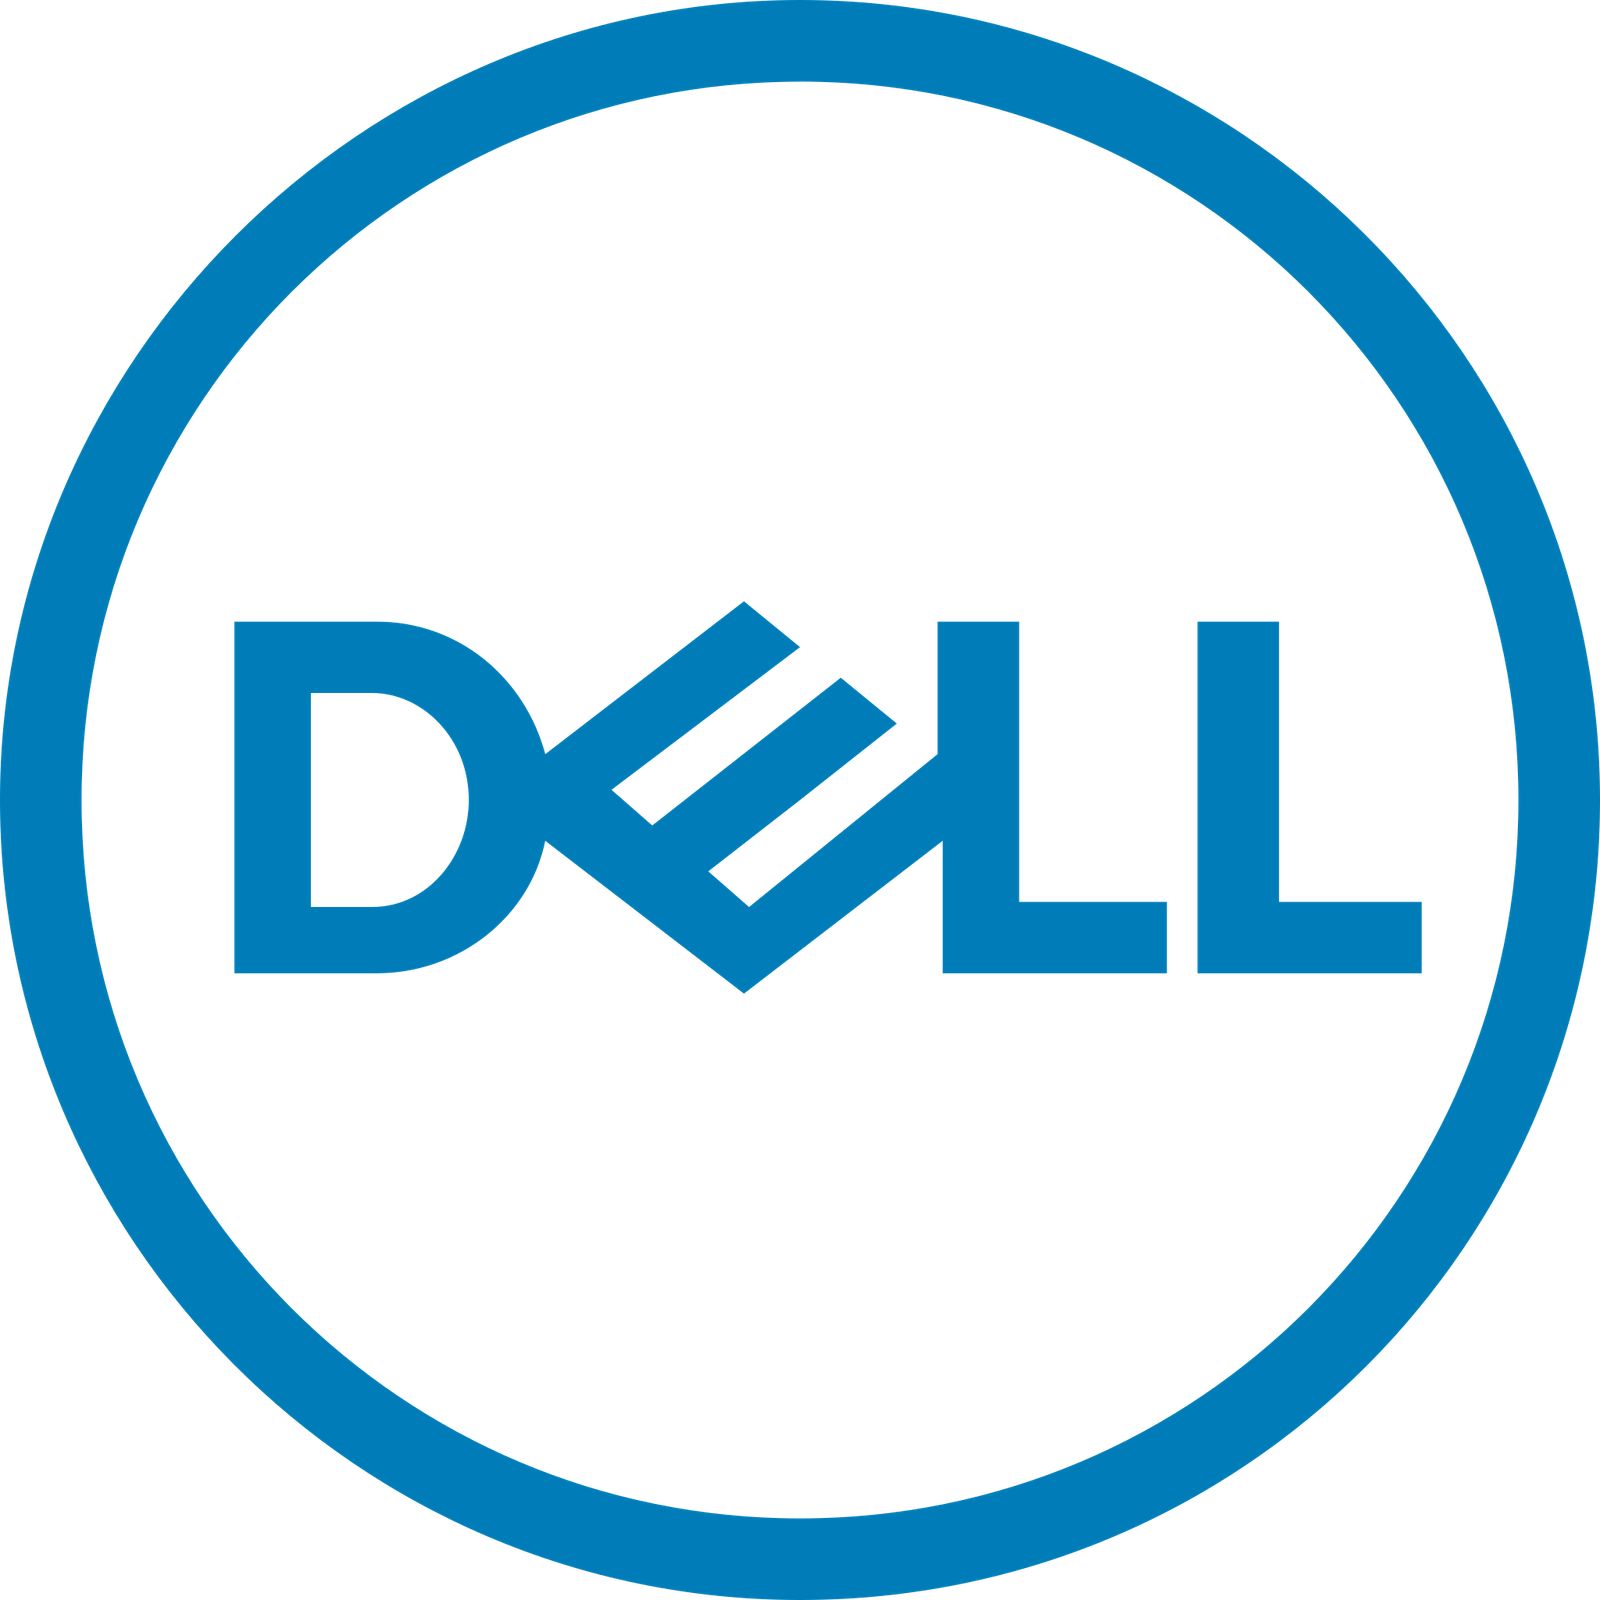 Home marketplace - dell logo 2016. Svg